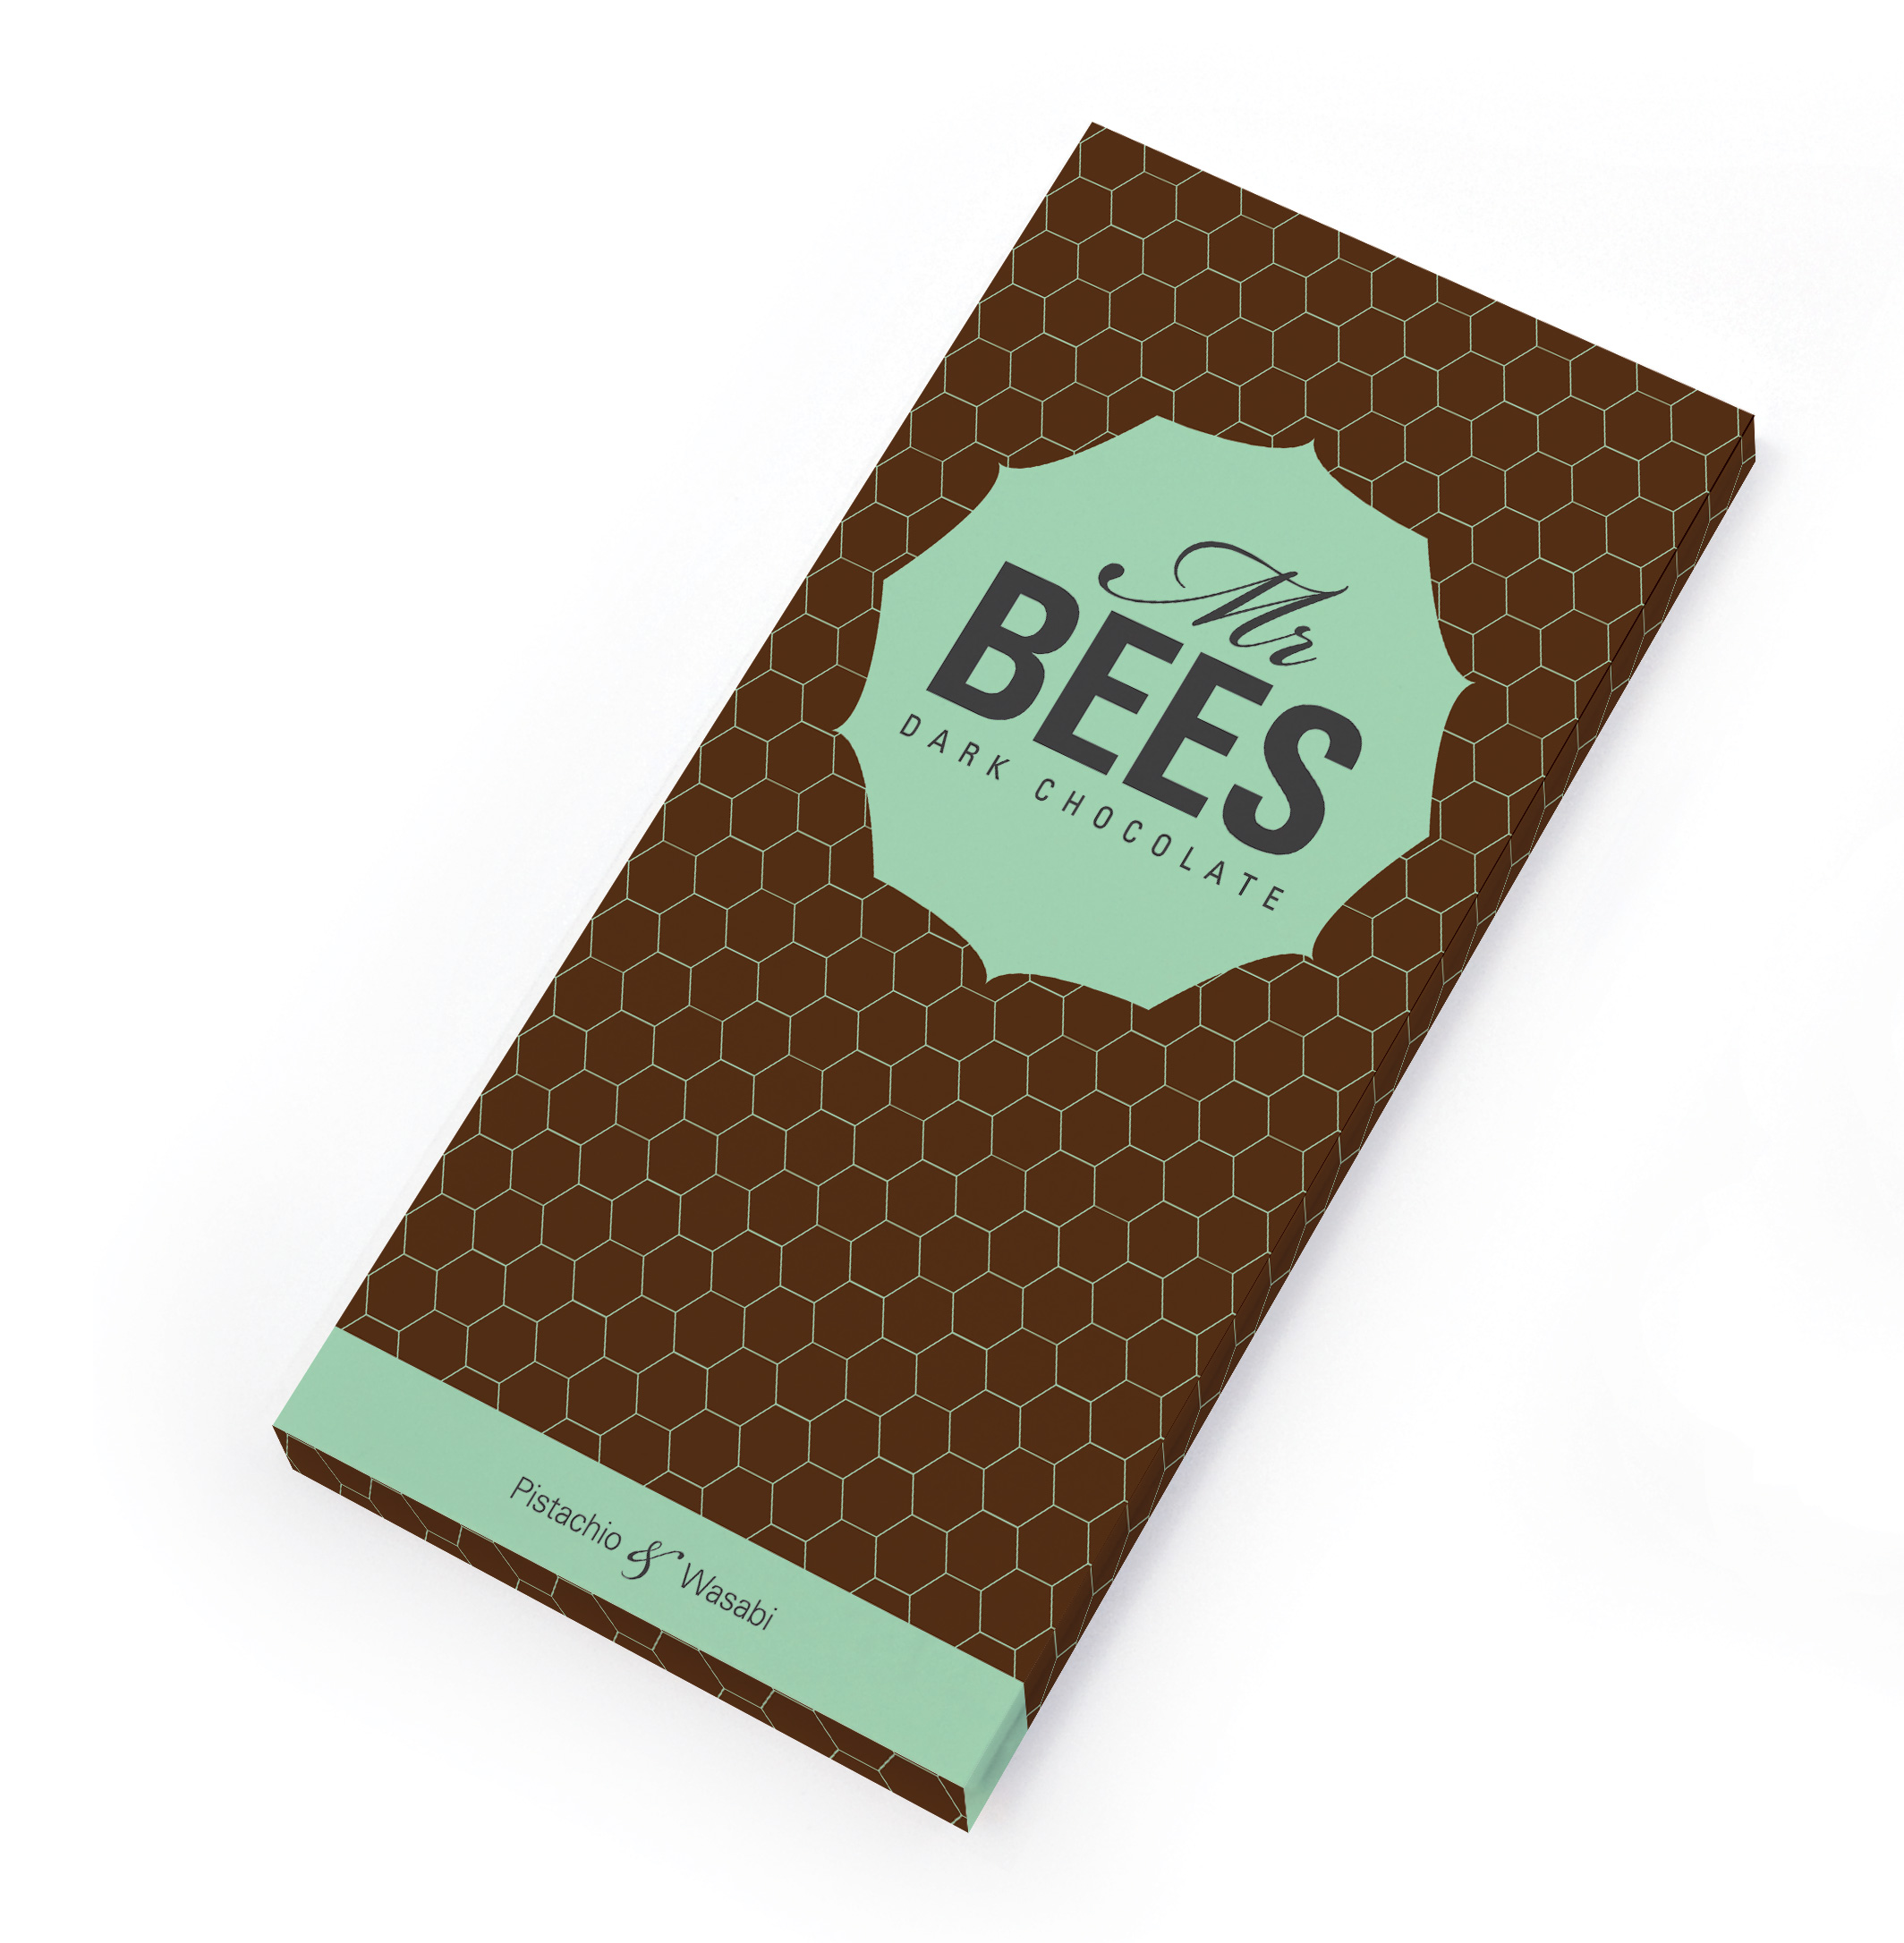 Mr Bees Chocolate Packaging